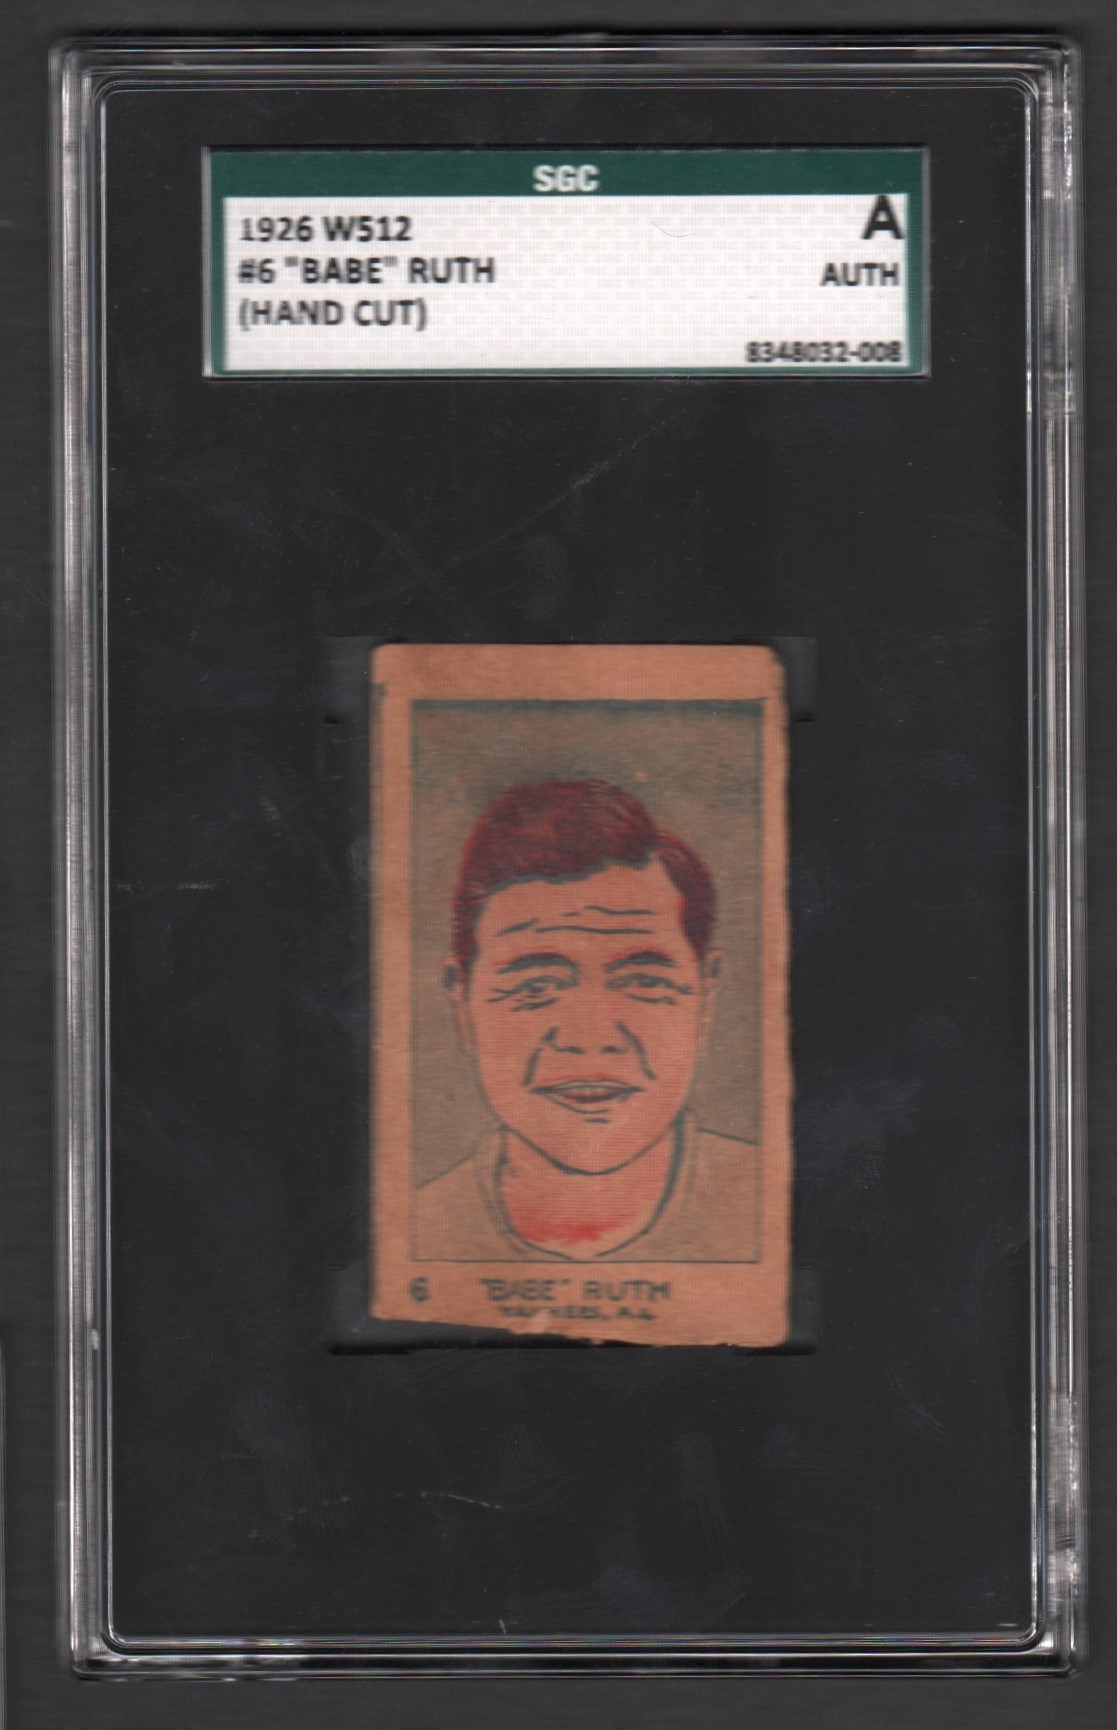 - 1926 W512 Babe Ruth (Hand Cut) - SGC AUTHENTIC